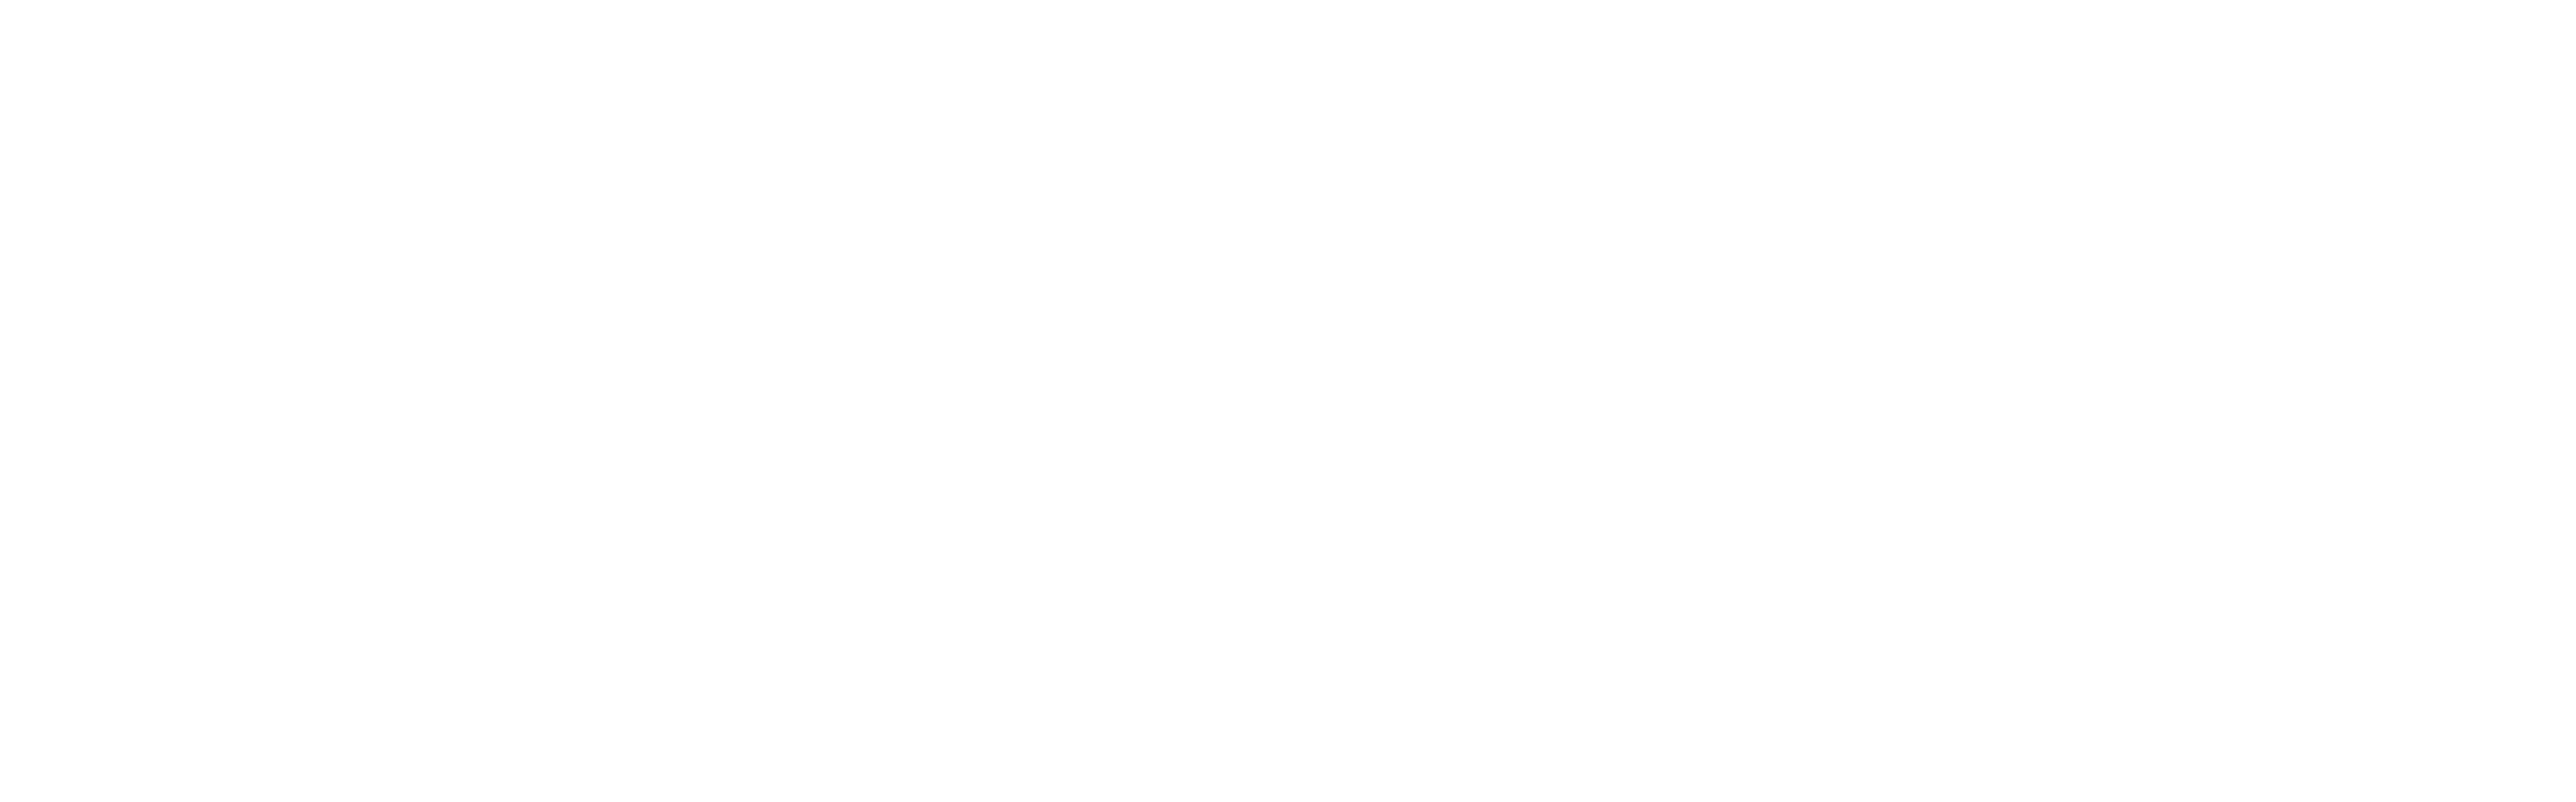 company-info